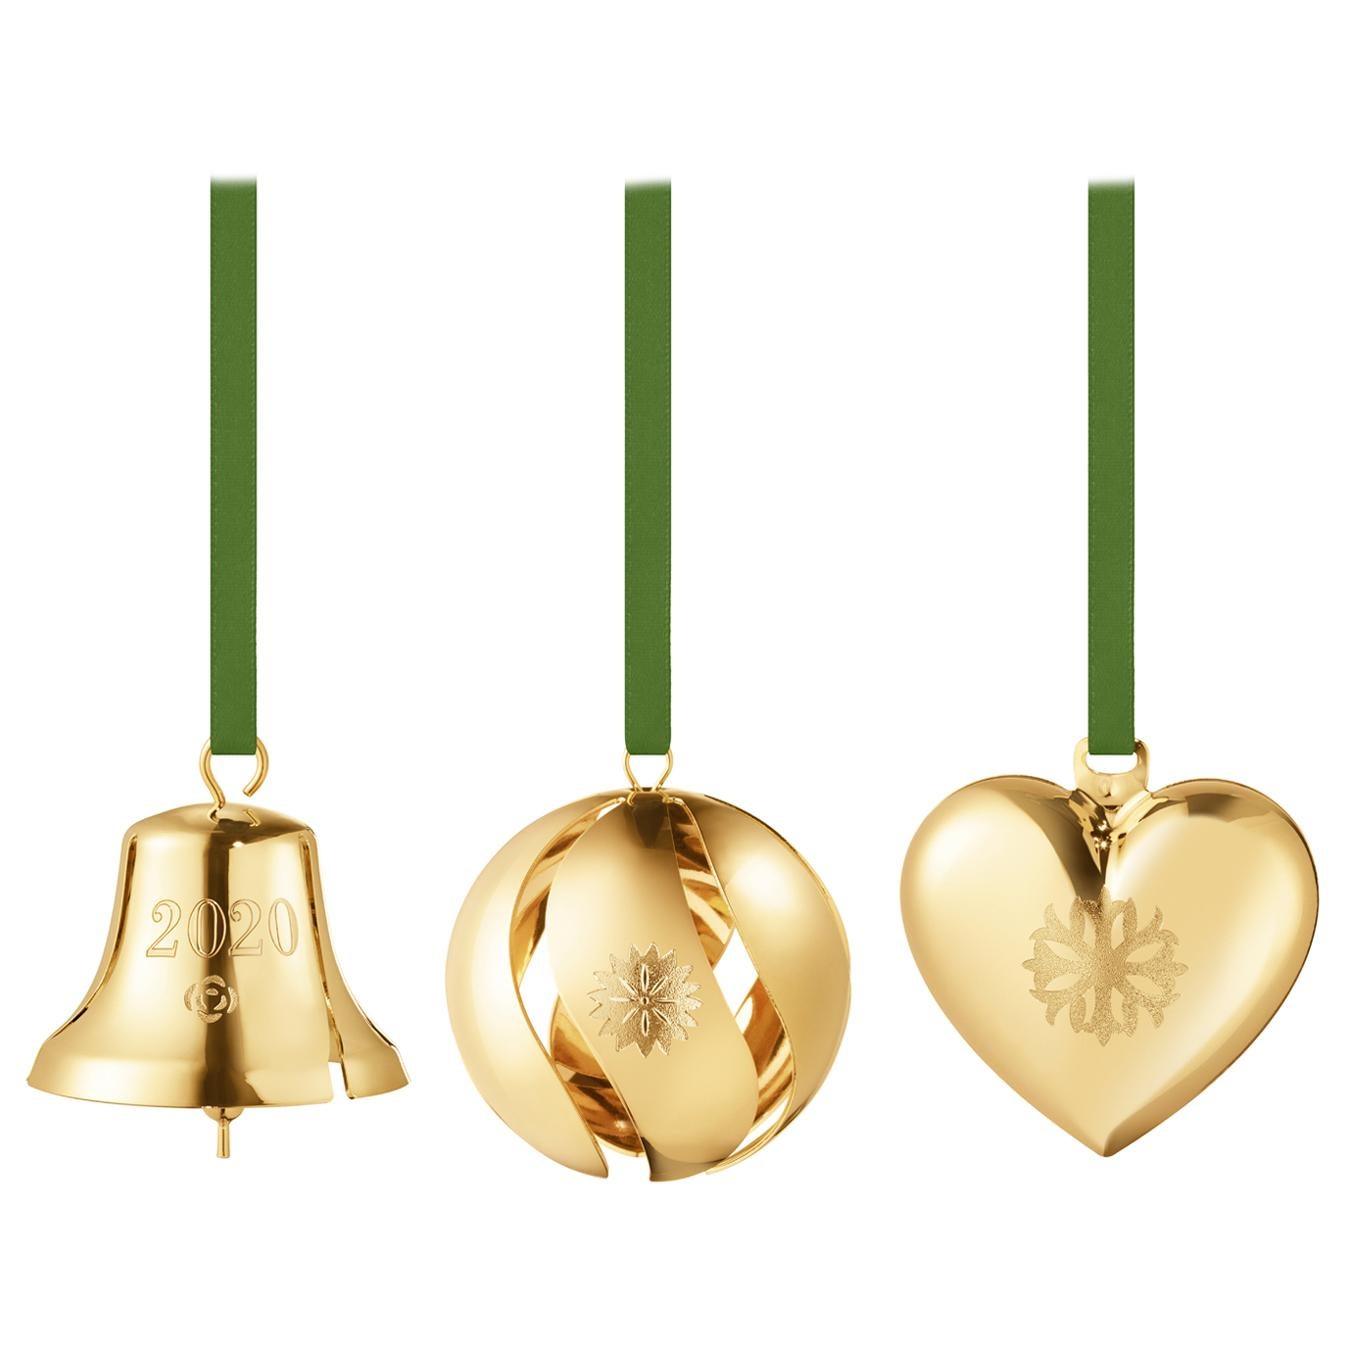 Cc 2020 3 Pcs Gift Set Bell, Ball, Heart Gold For Sale